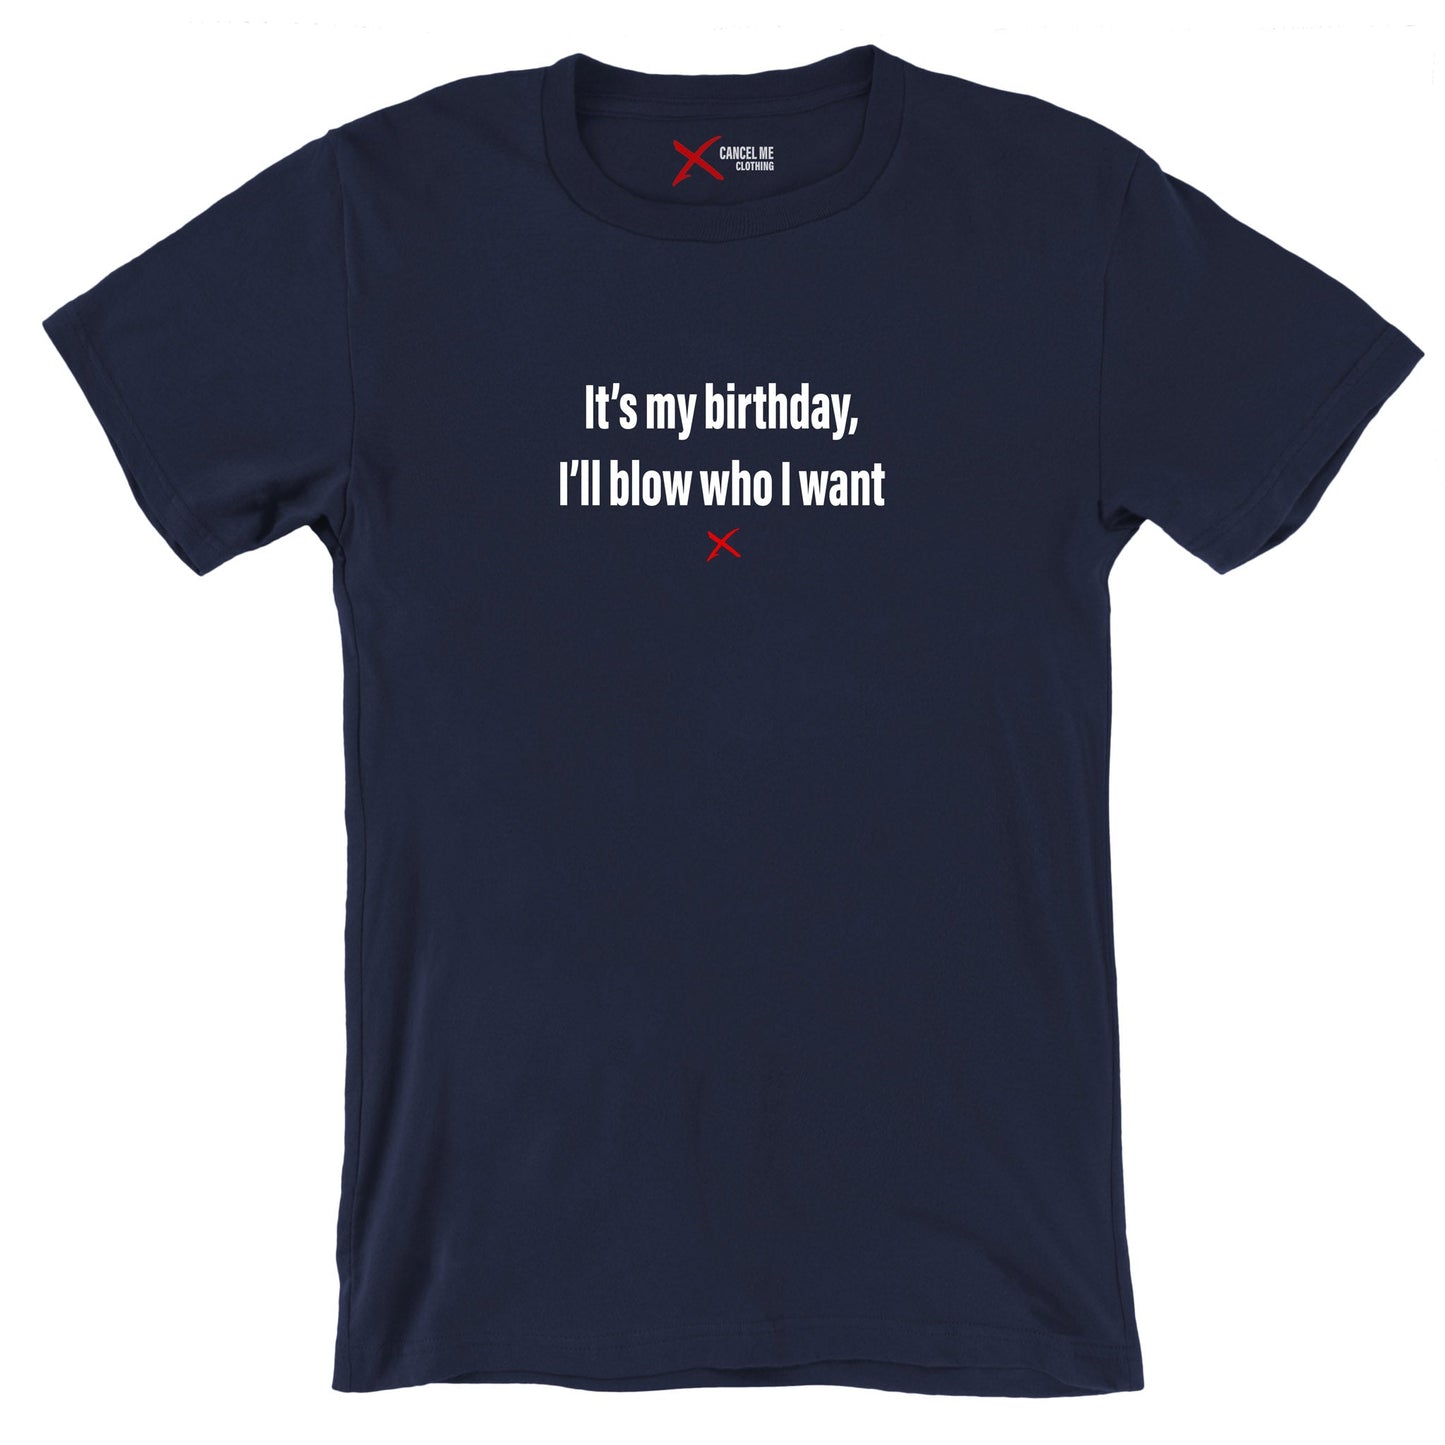 It's my birthday, I'll blow who I want - Shirt